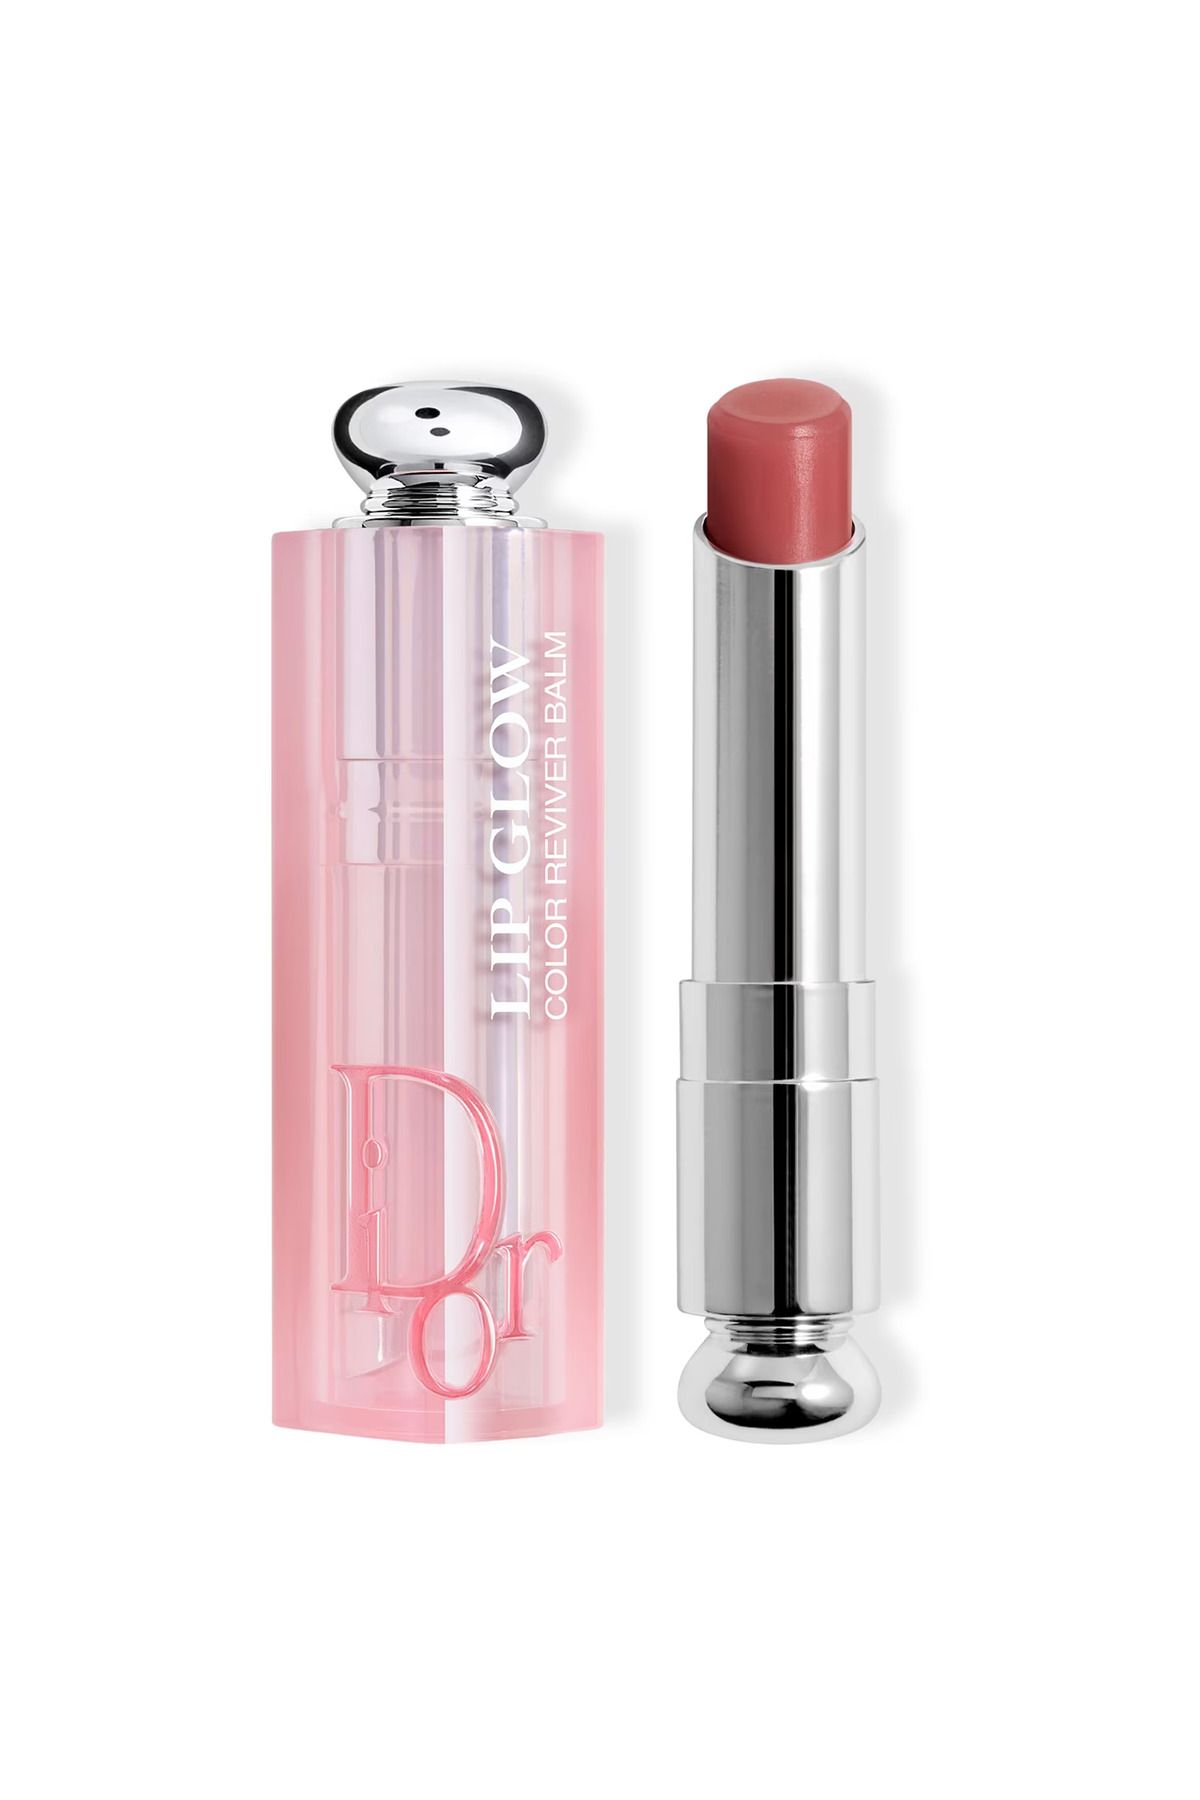 Dior - Dudak Balmı - Dior Addict Lip Glow - 012 Rosewood (3,2 g)